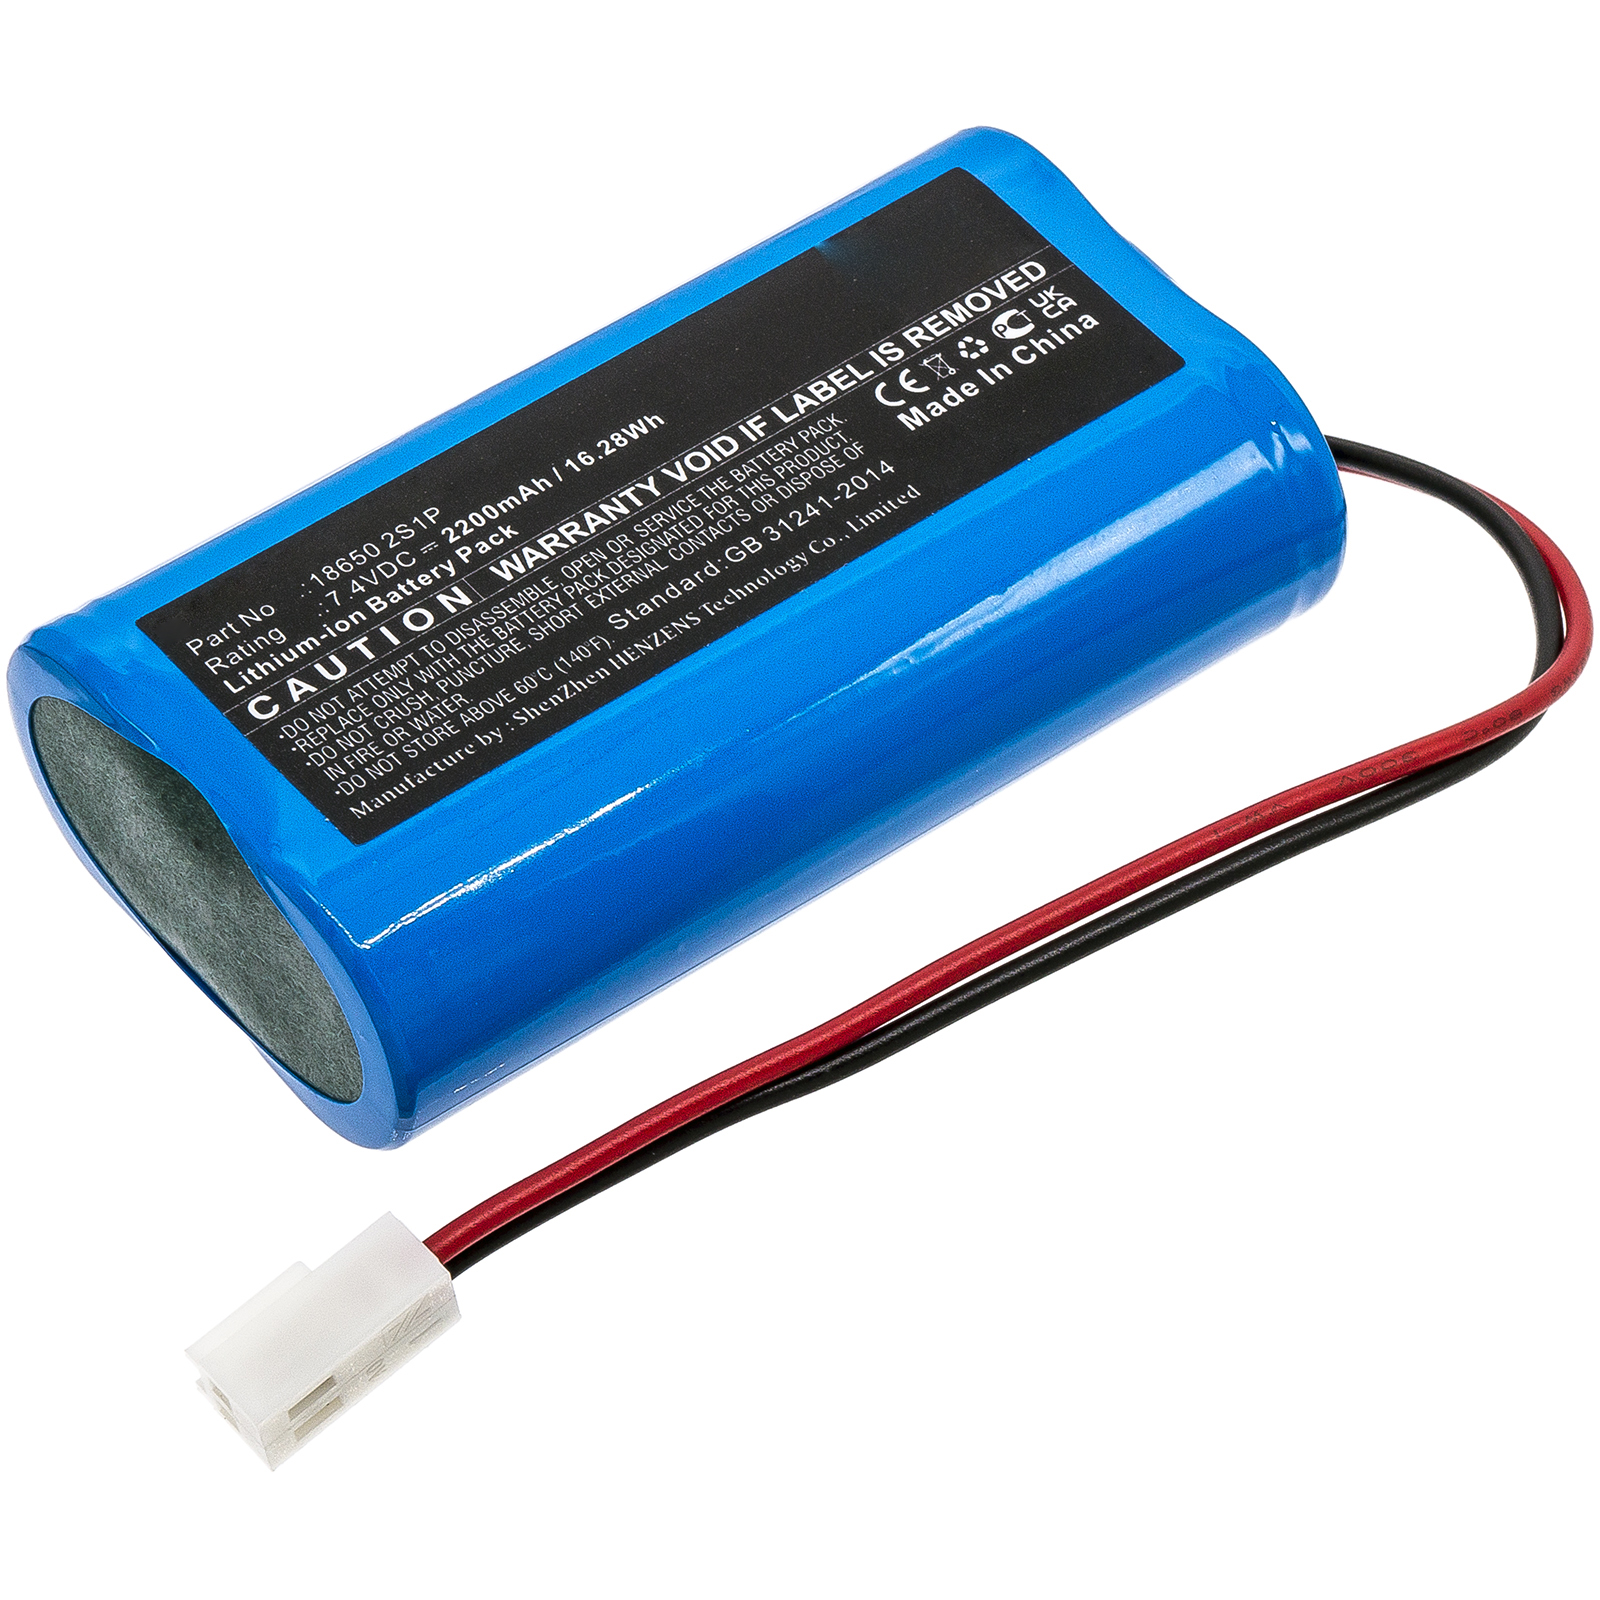 Synergy Digital Emergency Lighting Battery, Compatible with Neptolux 175-1196C Emergency Lighting Battery (Li-ion, 7.4V, 2200mAh)